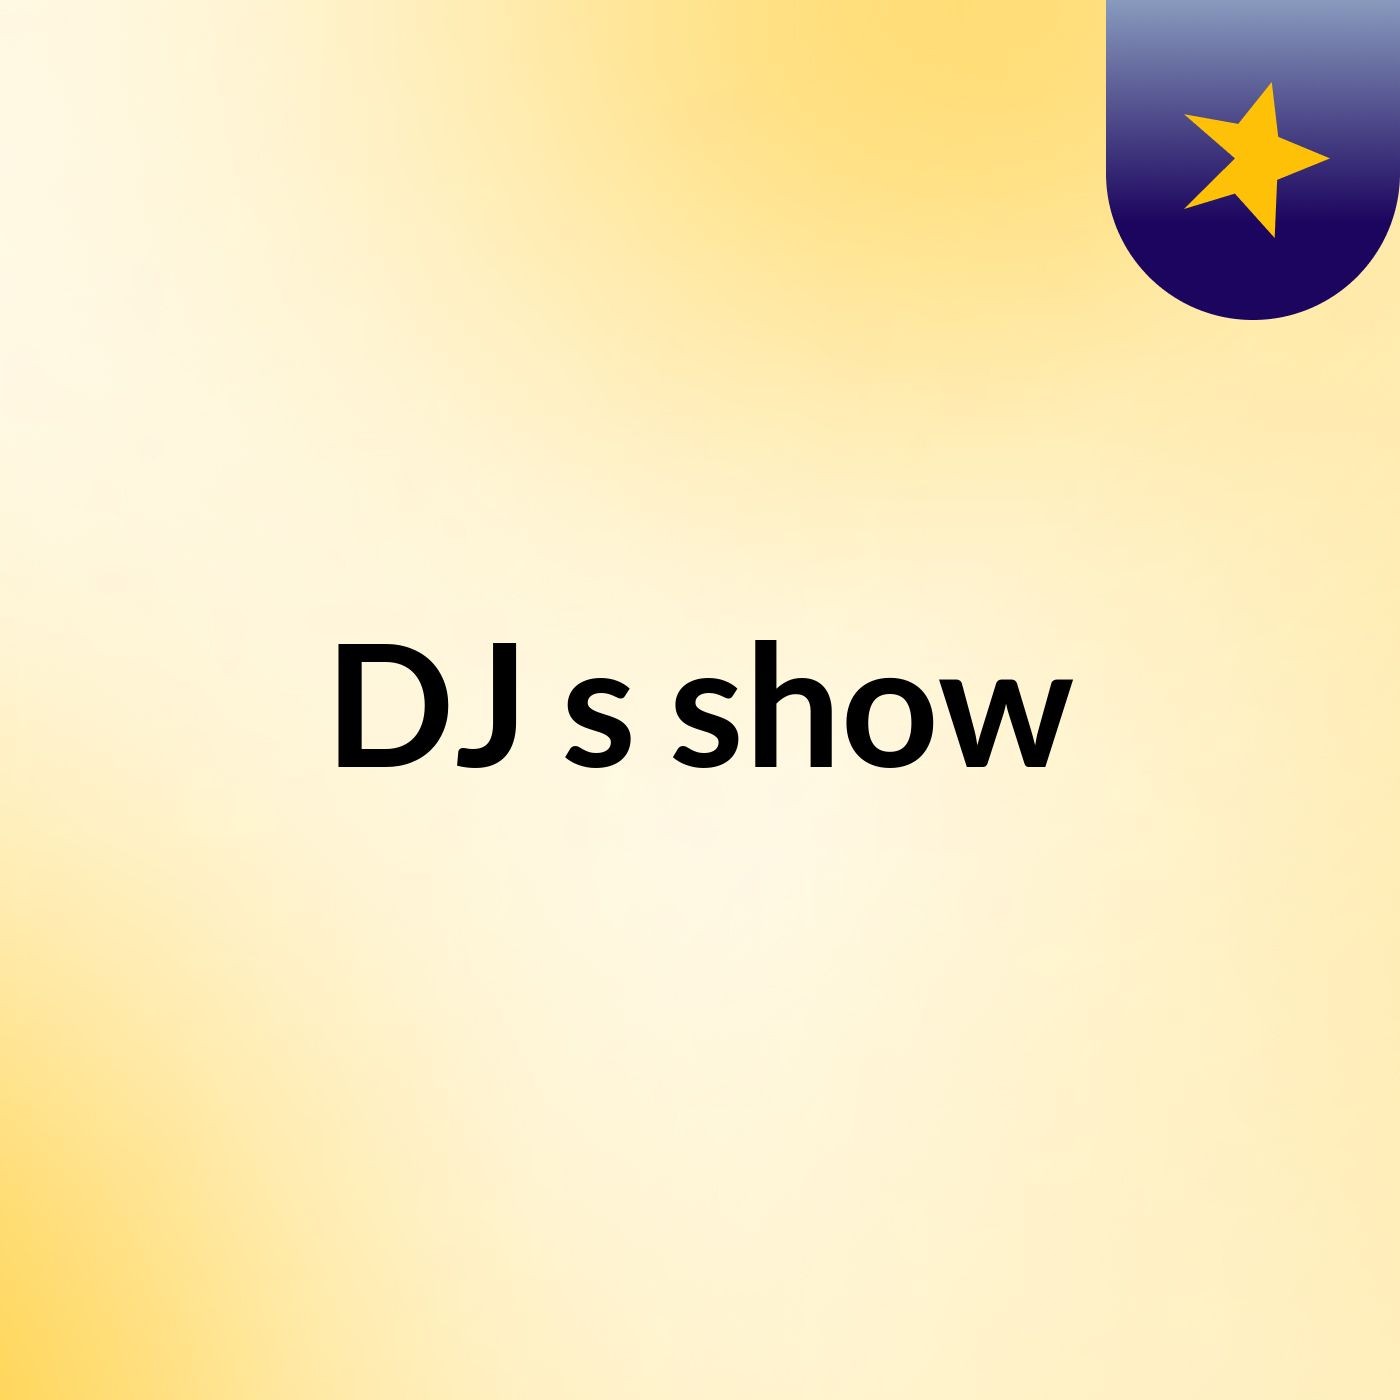 DJ's show